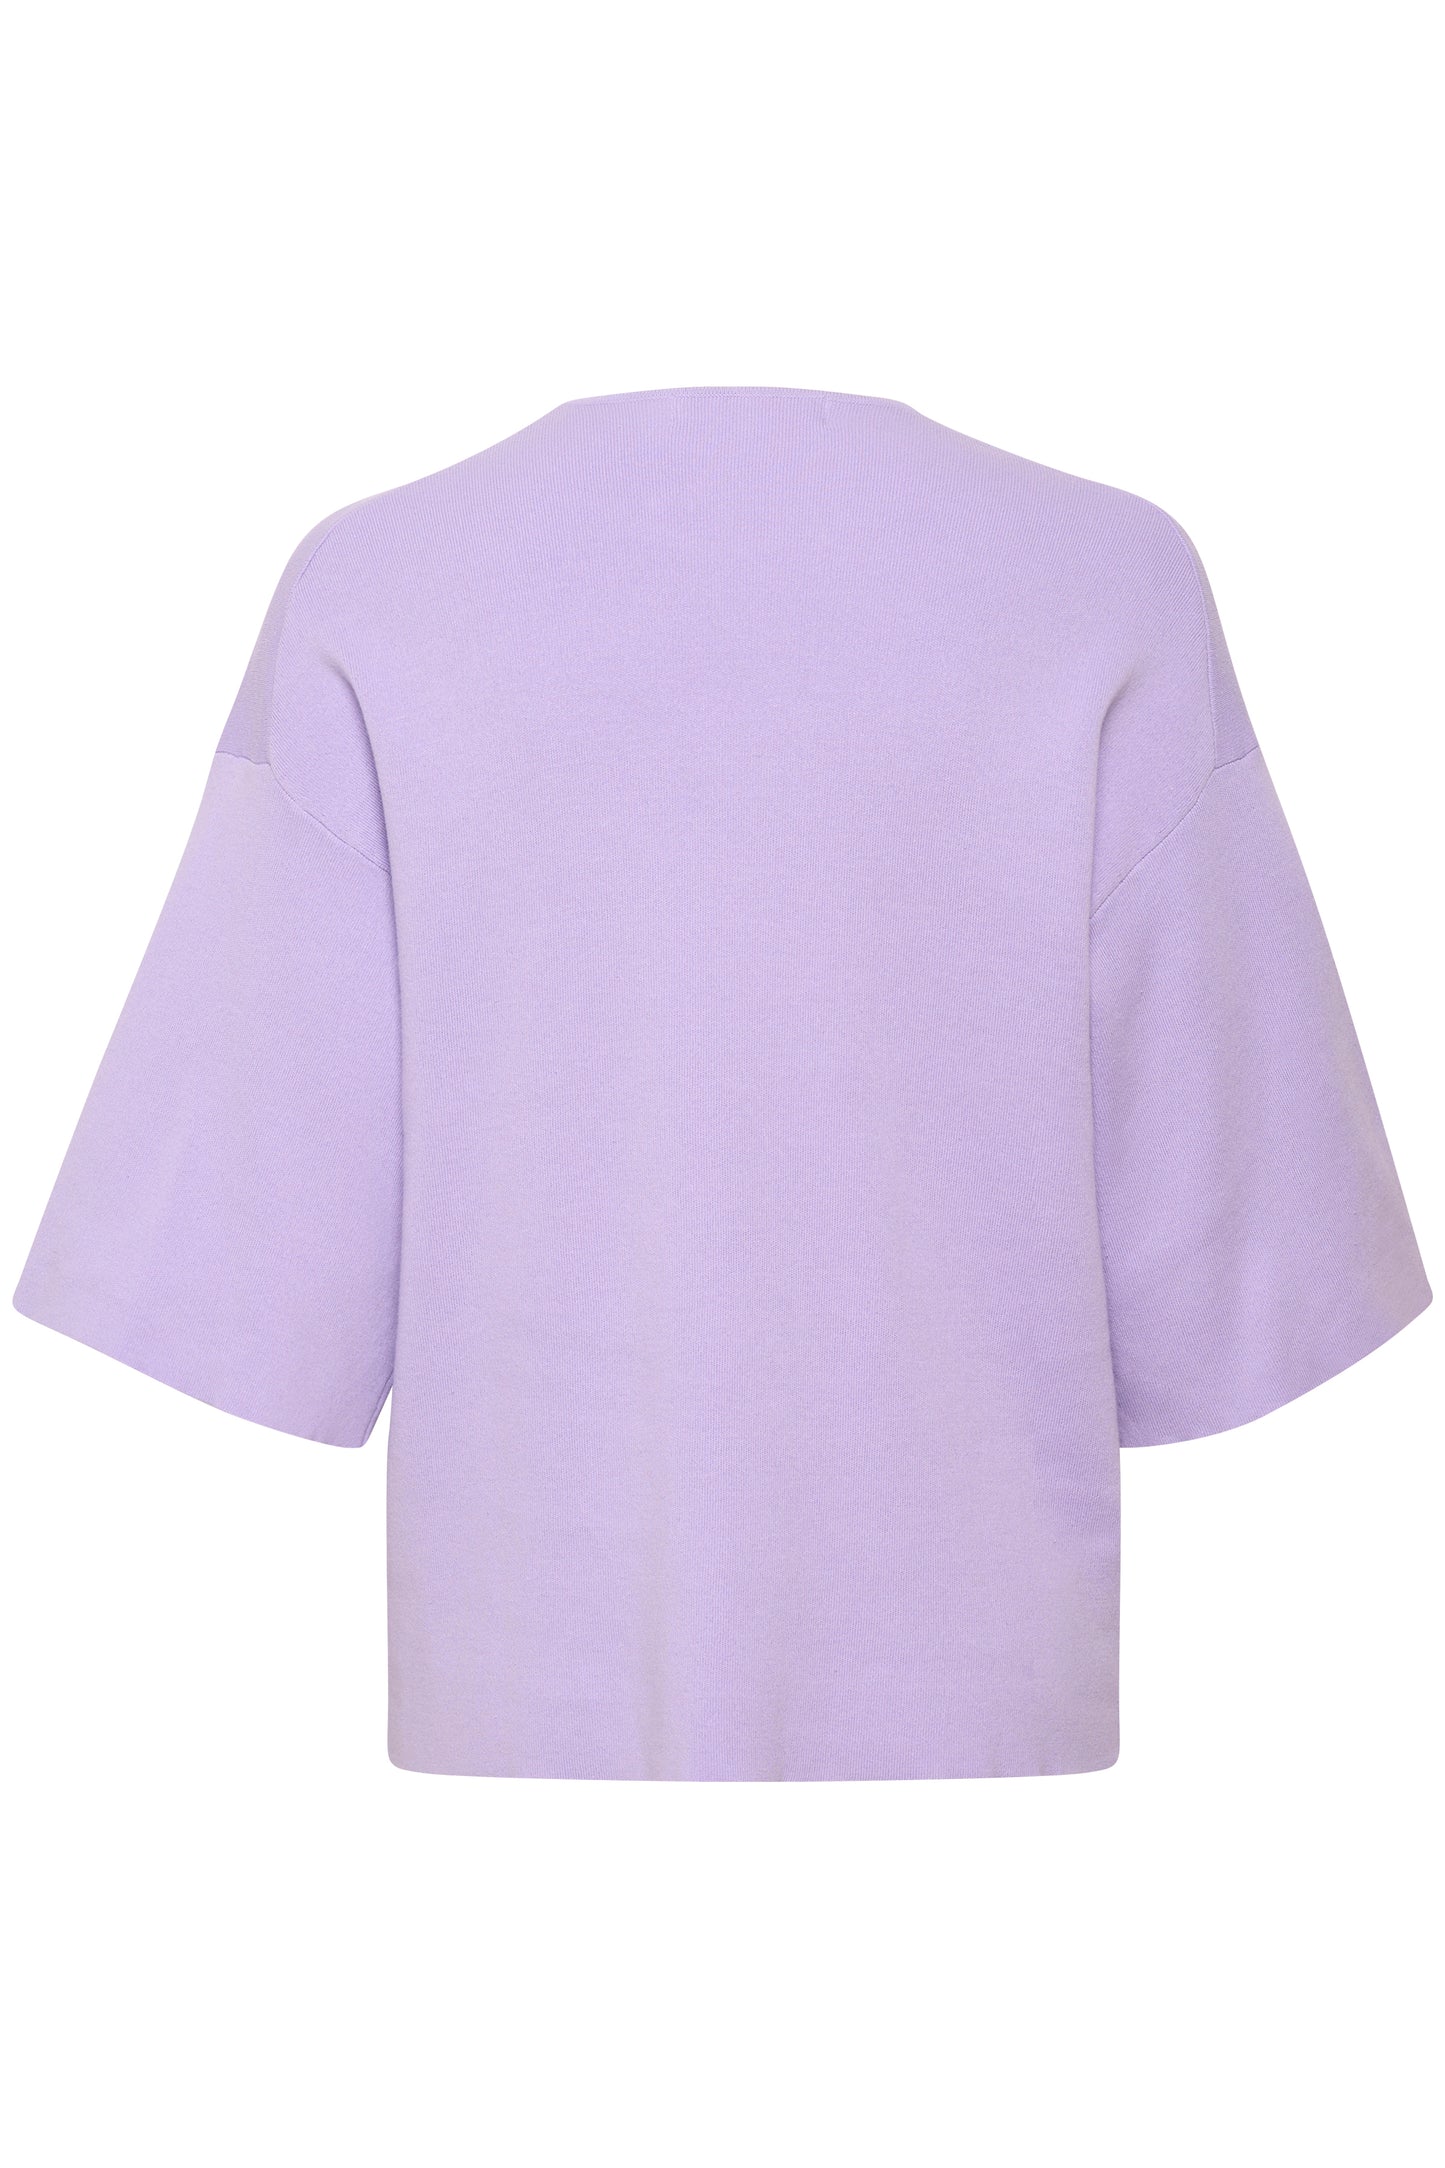 Mekolw Oversized Tshirt in Lavender